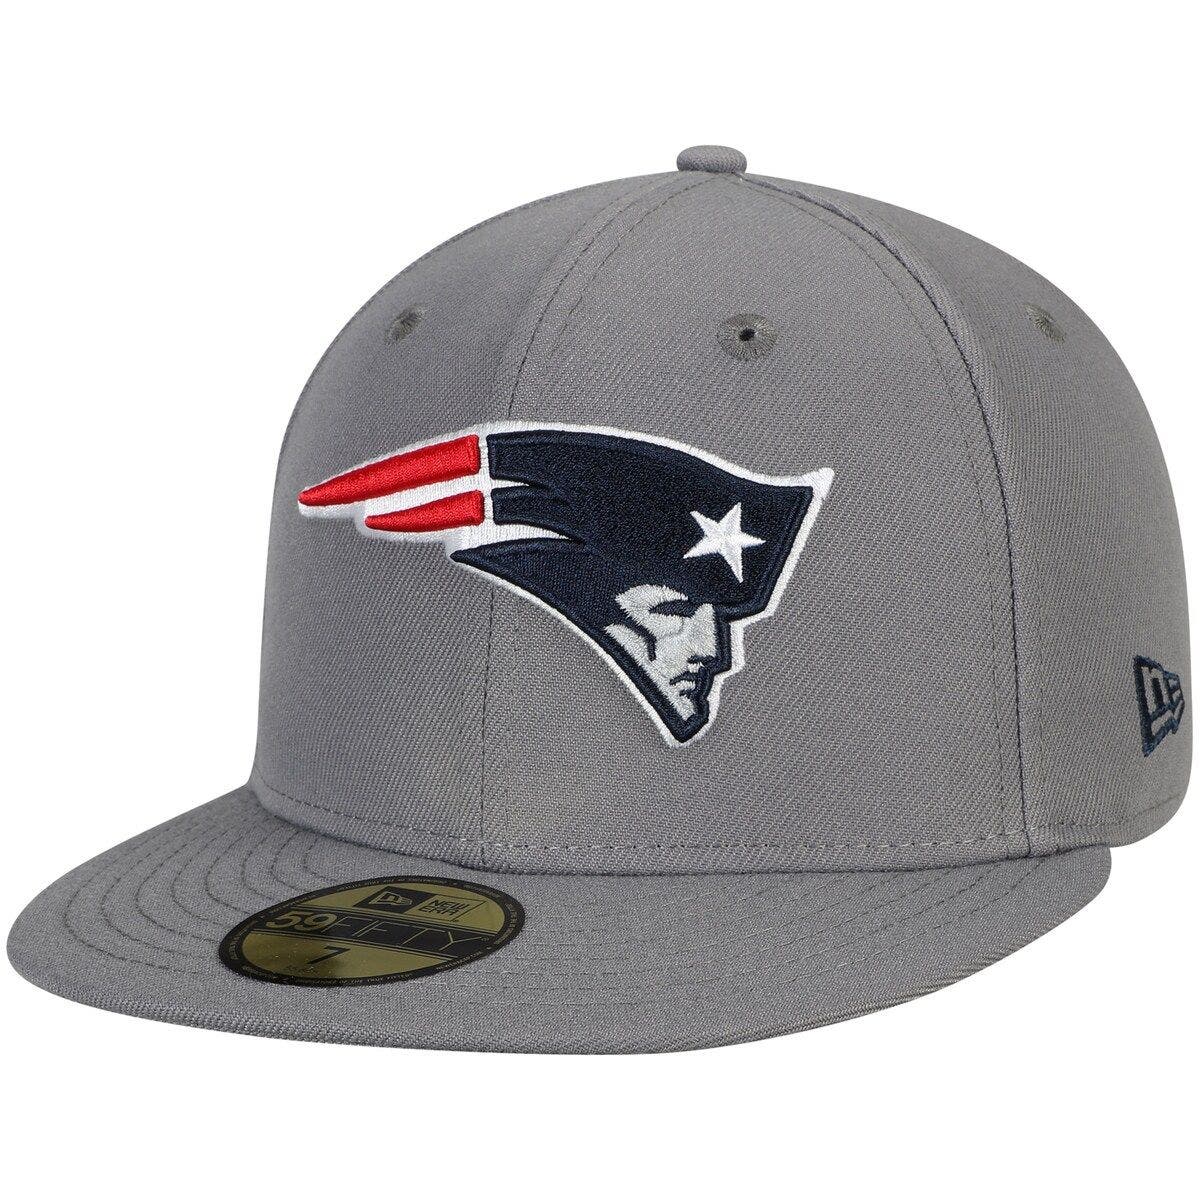 GRAPHITE New England Patriots New Era 59Fifty Cap 